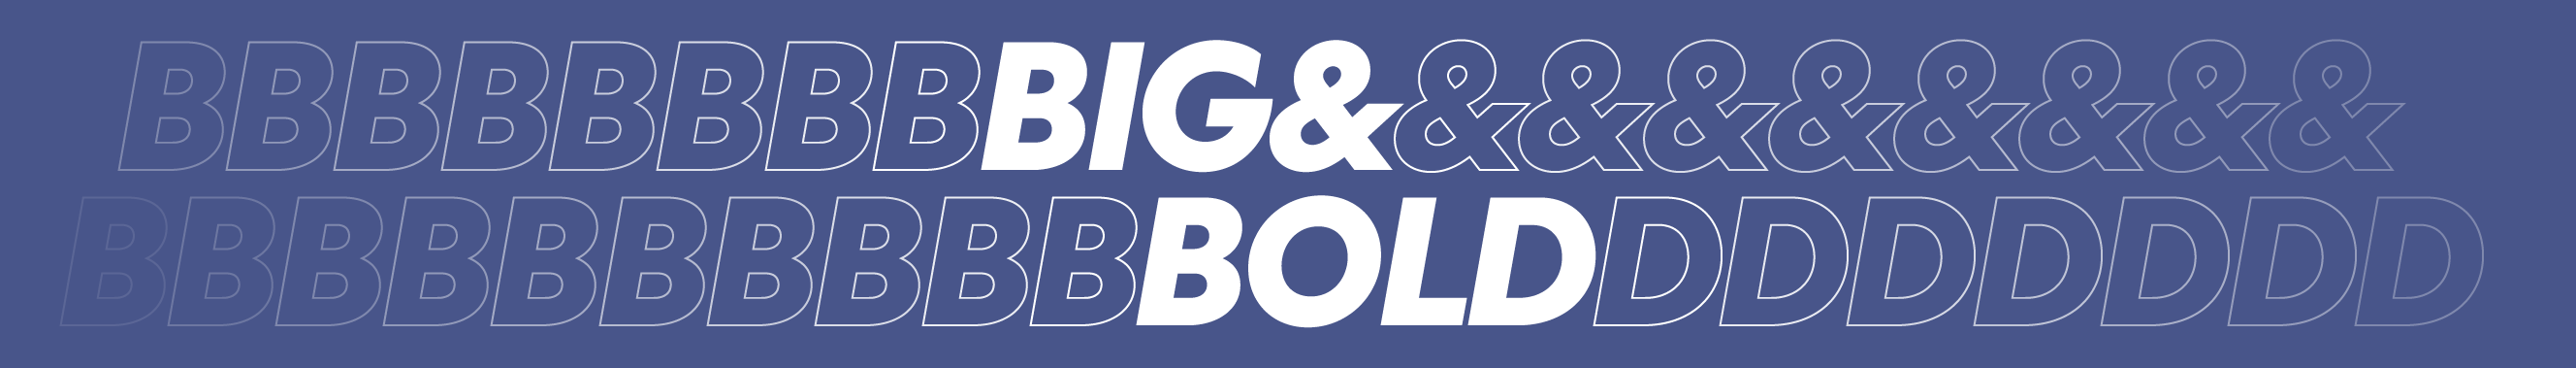 BigBold Type's profile banner